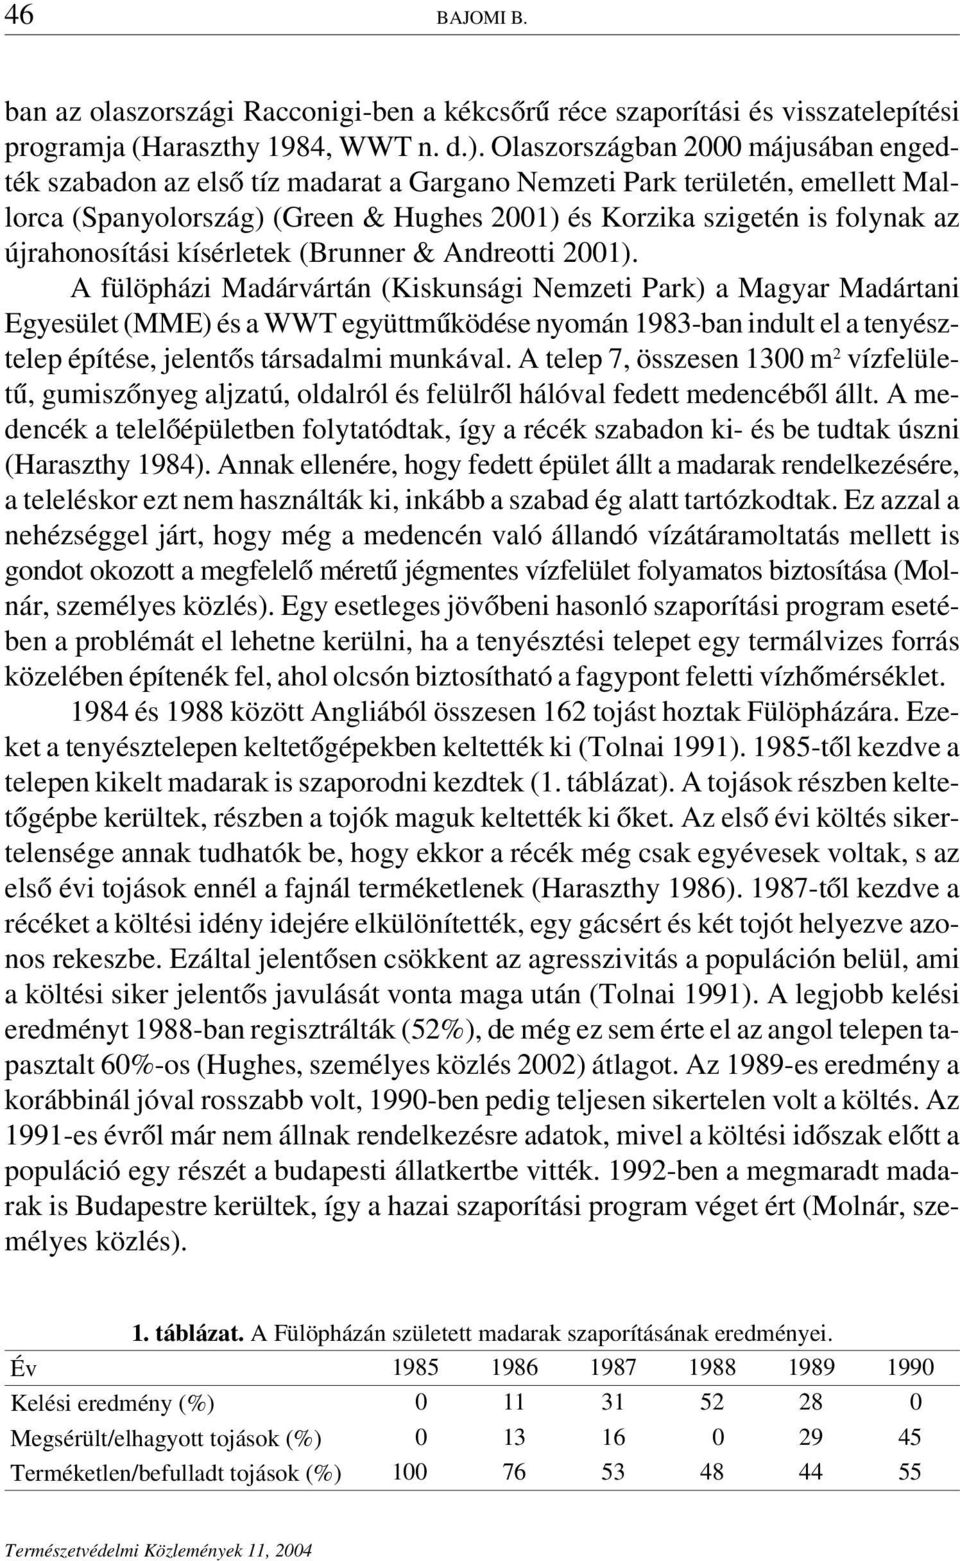 újrahonosítási kísérletek (Brunner & Andreotti 2001).